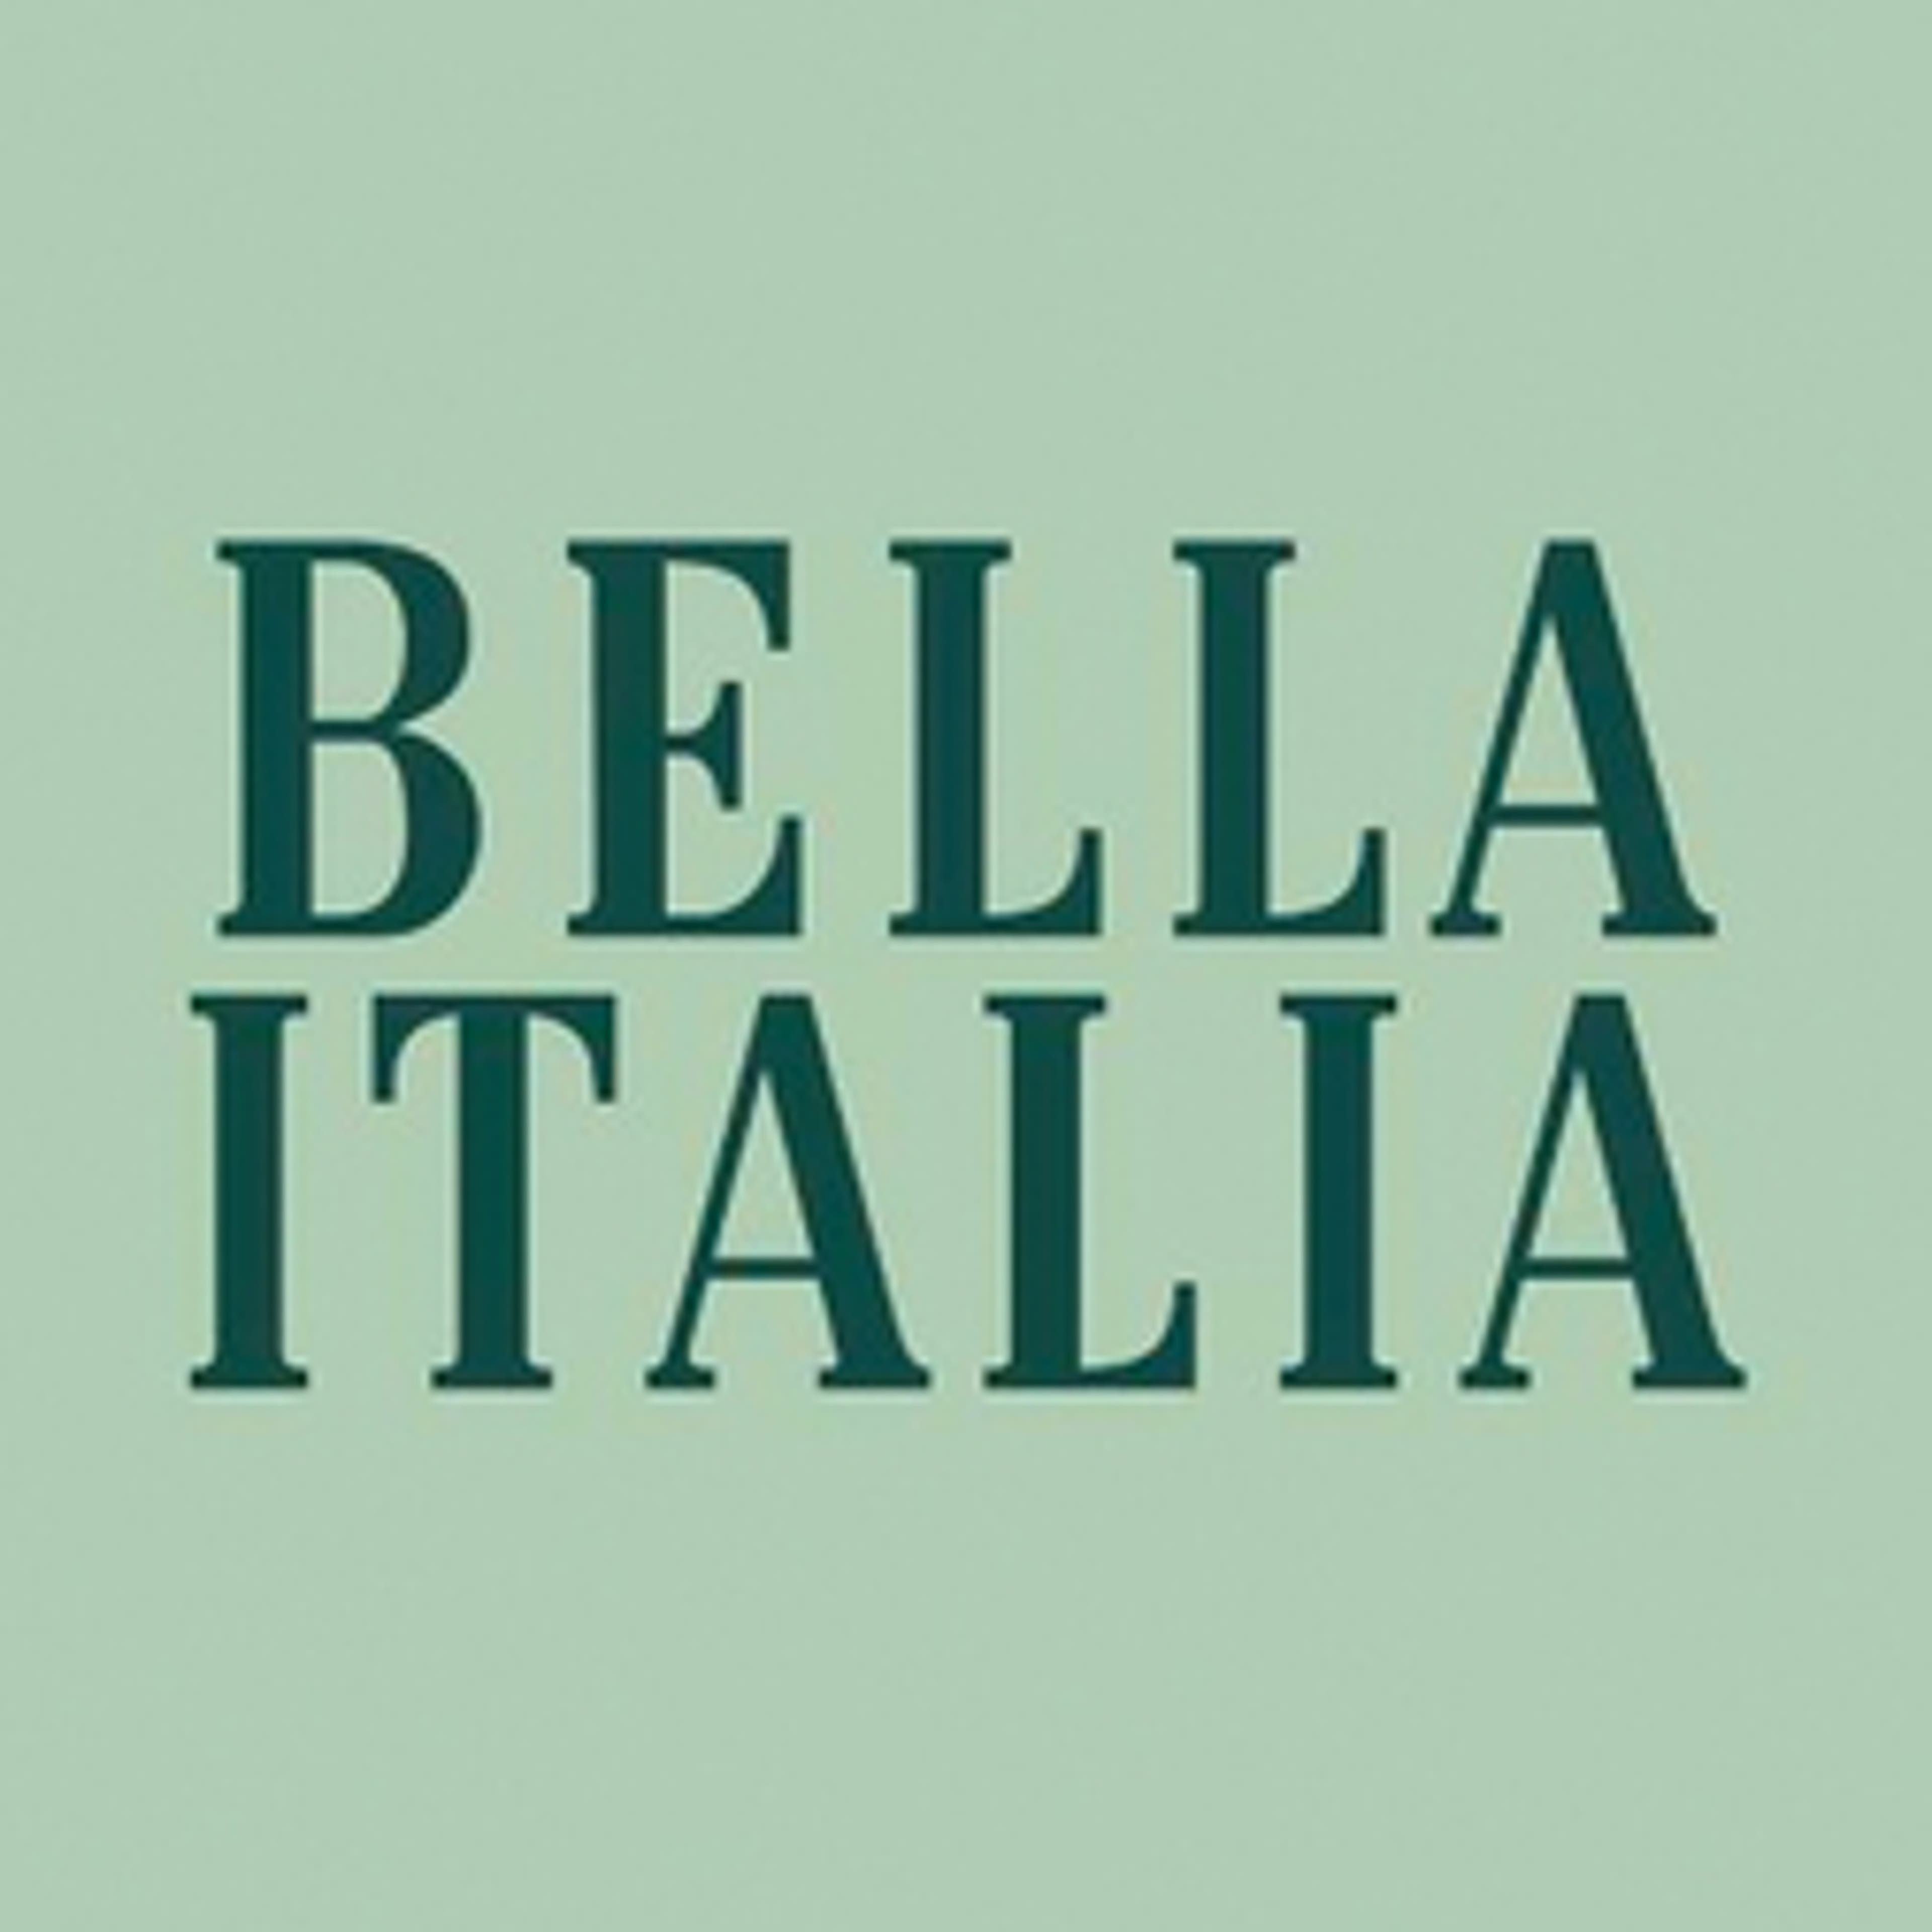  Bella Italia 